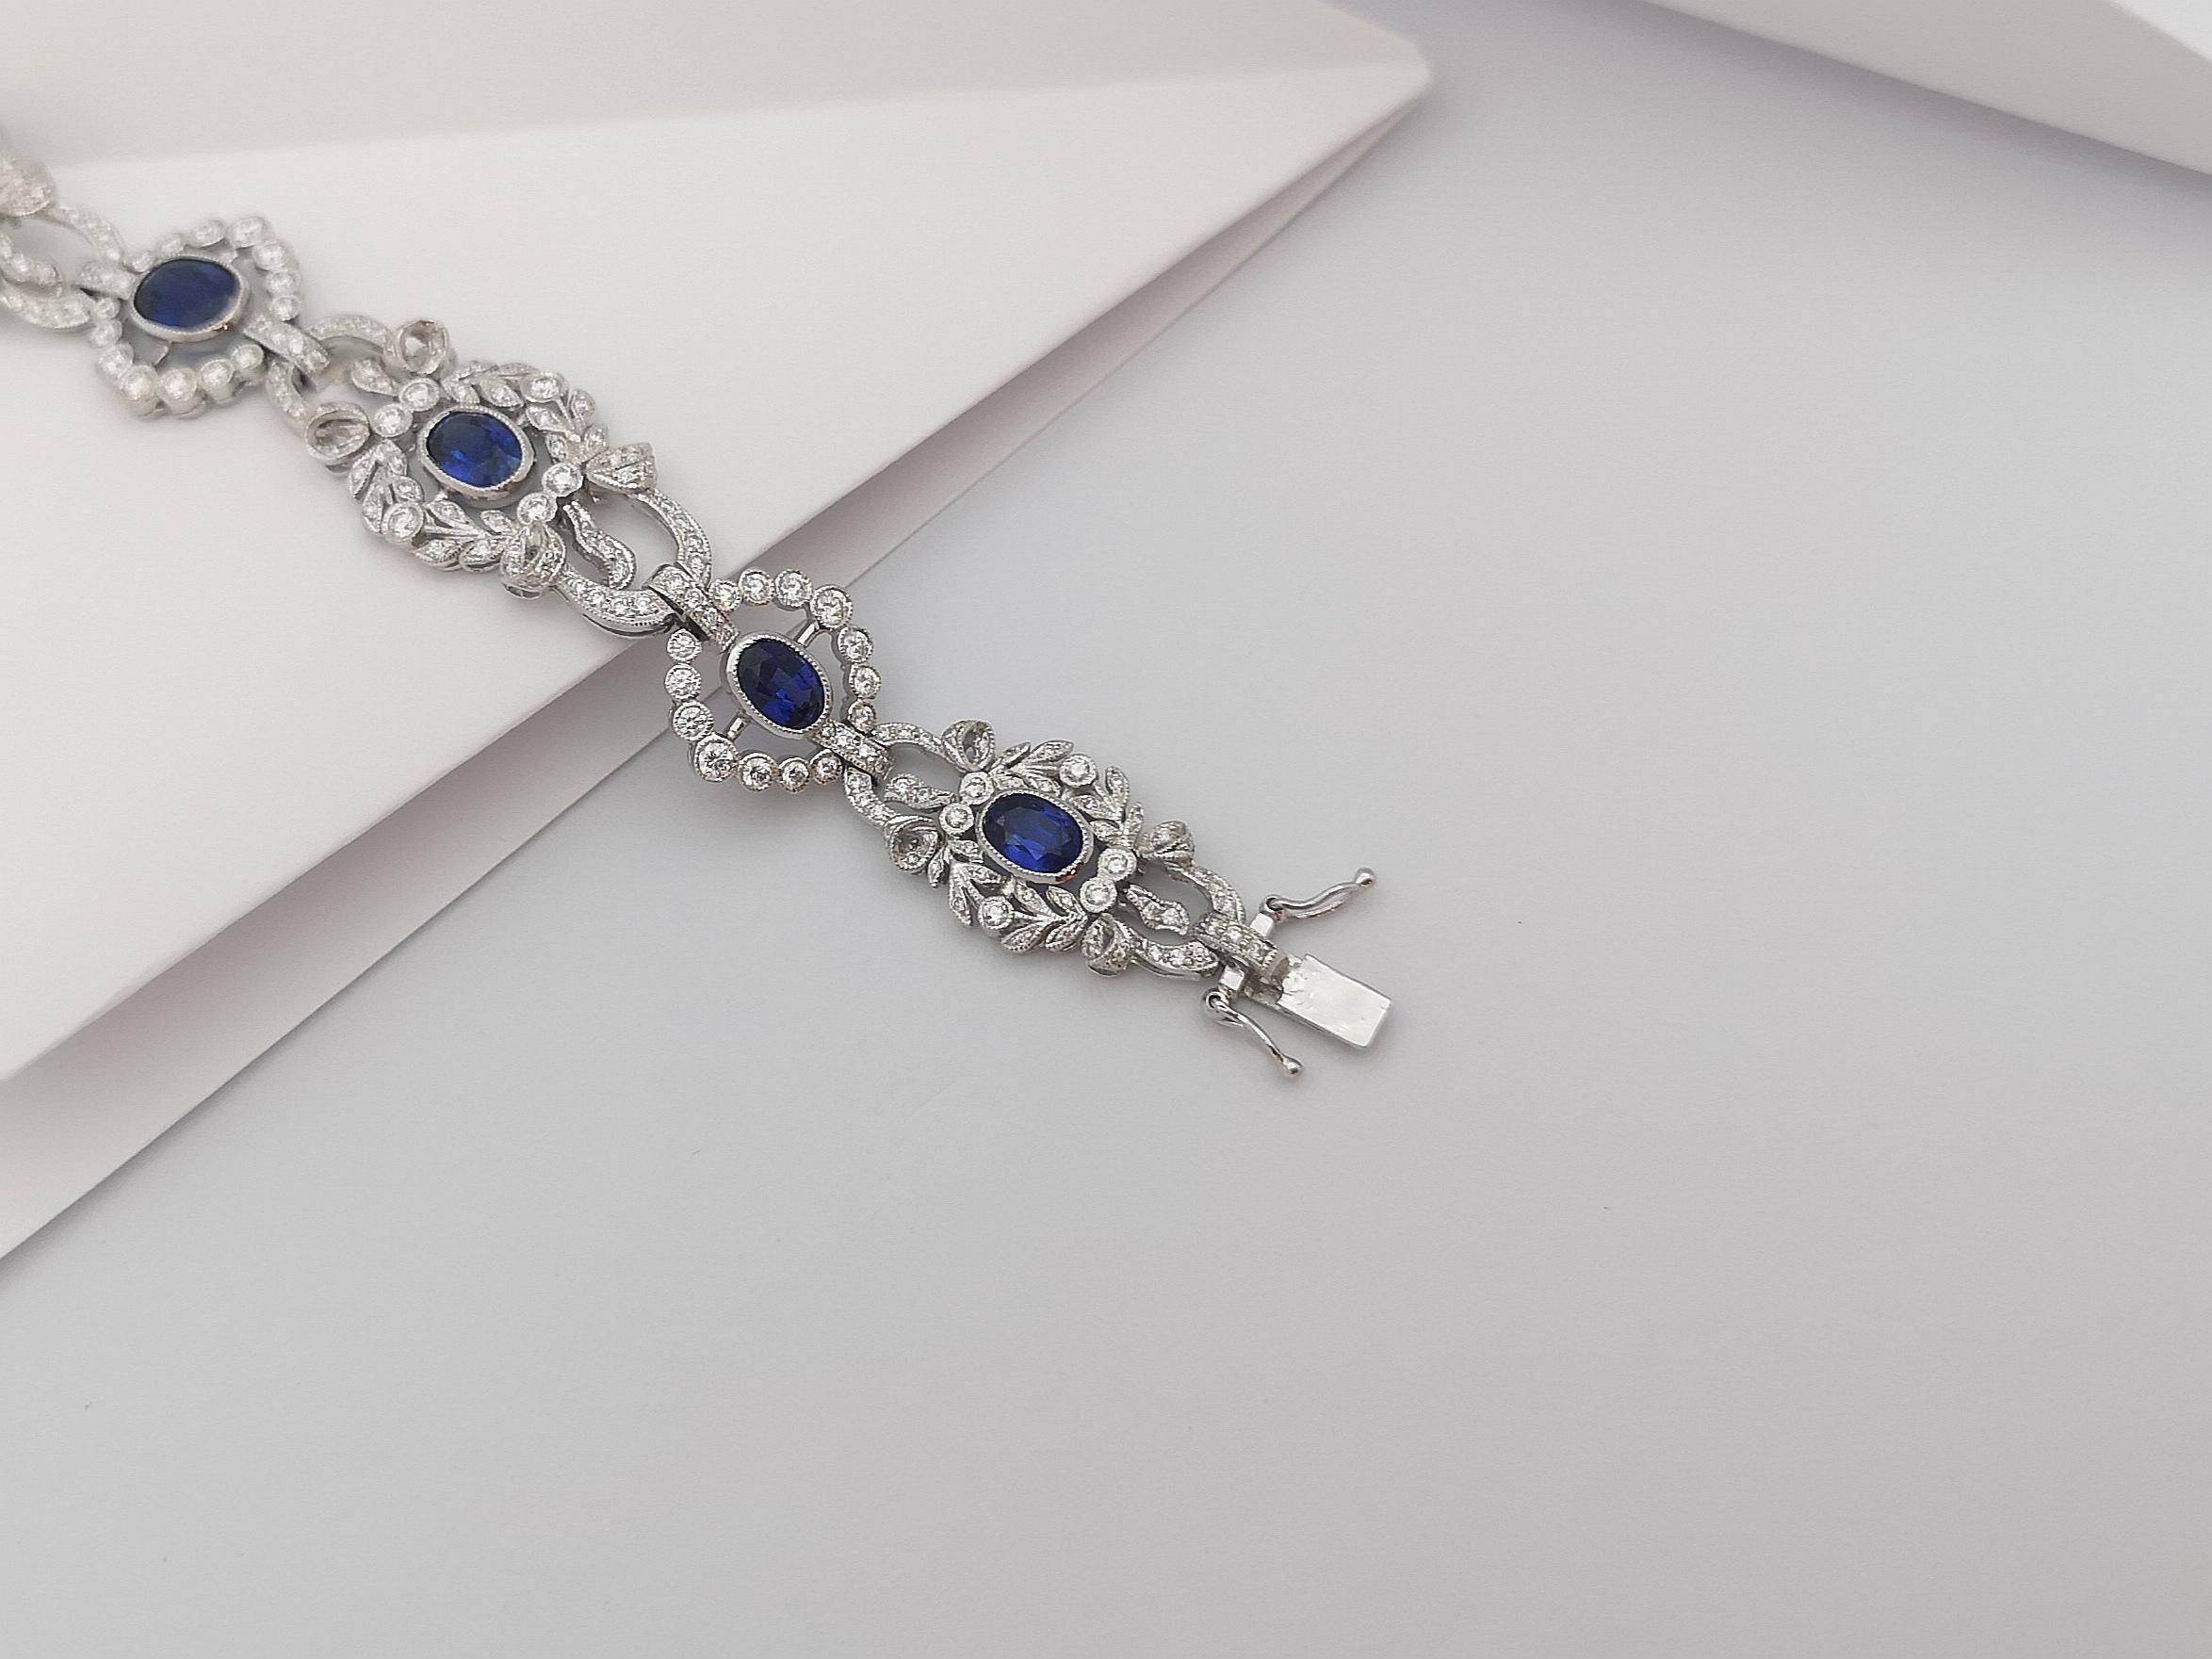  Blue Sapphire with Diamond Bracelet set in 18 Karat White Gold Settings For Sale 4